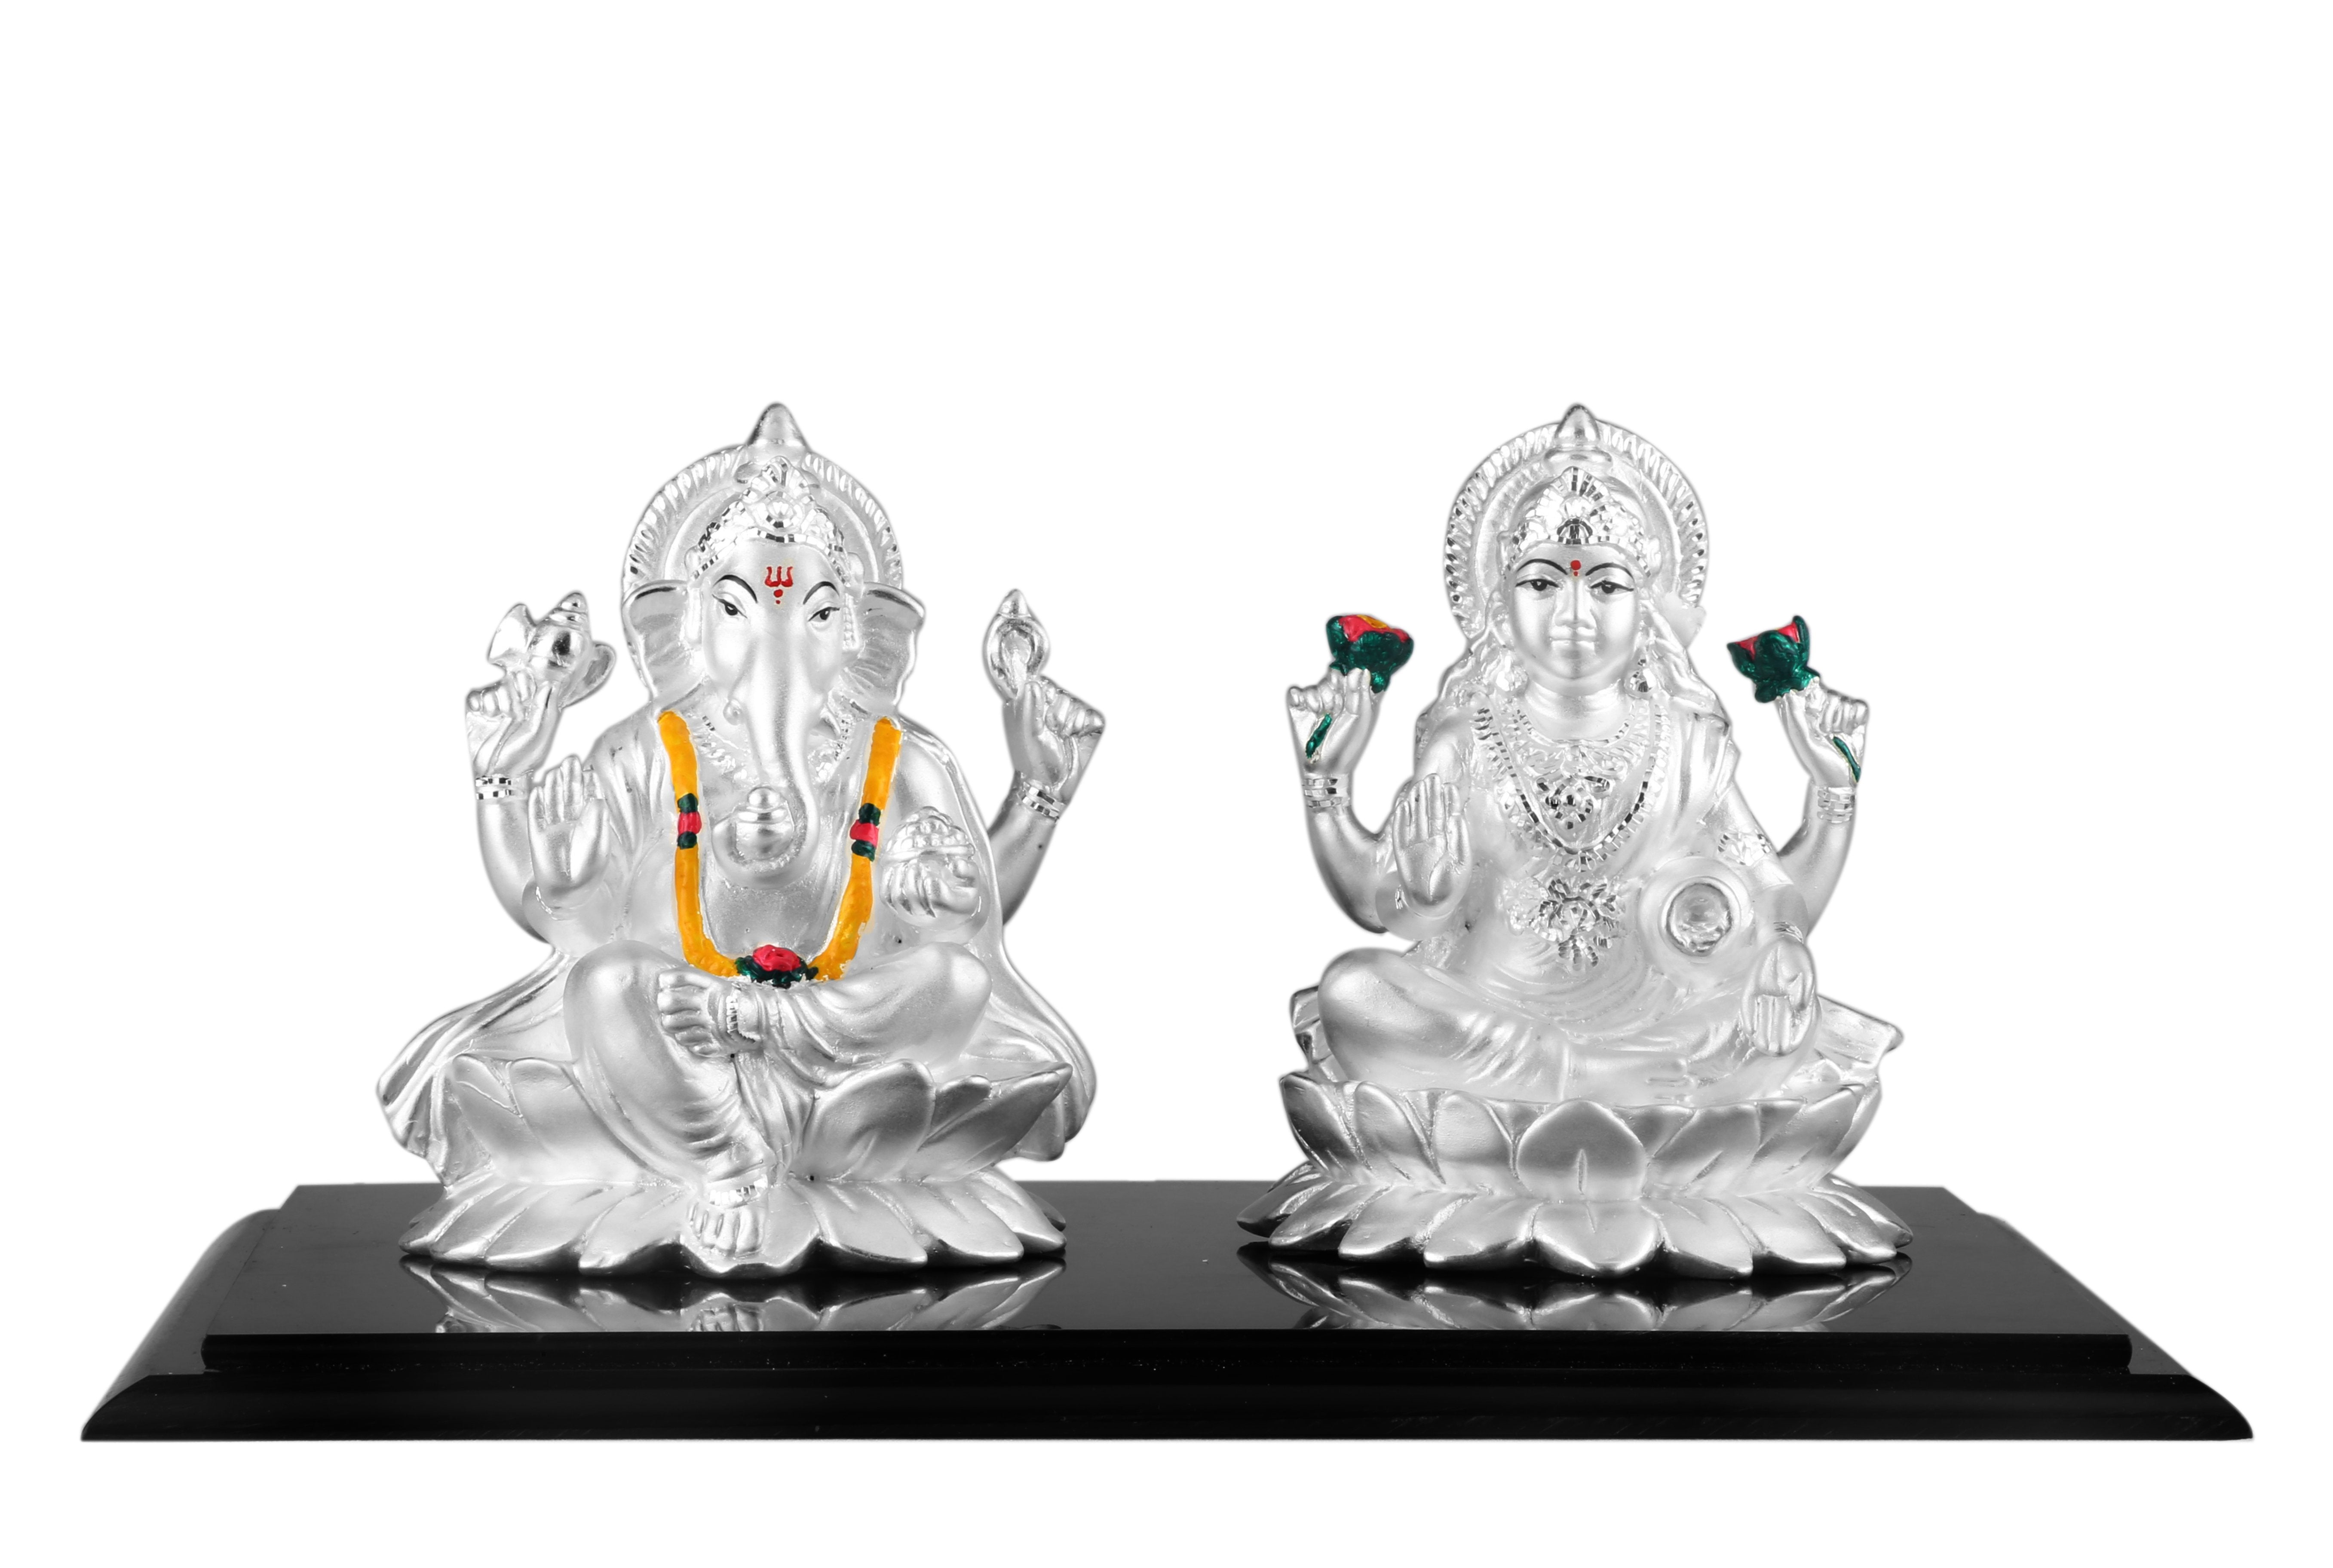 999 Pure Silver Ganesh Laxmi Idols By Krysaliis Isvara Medium